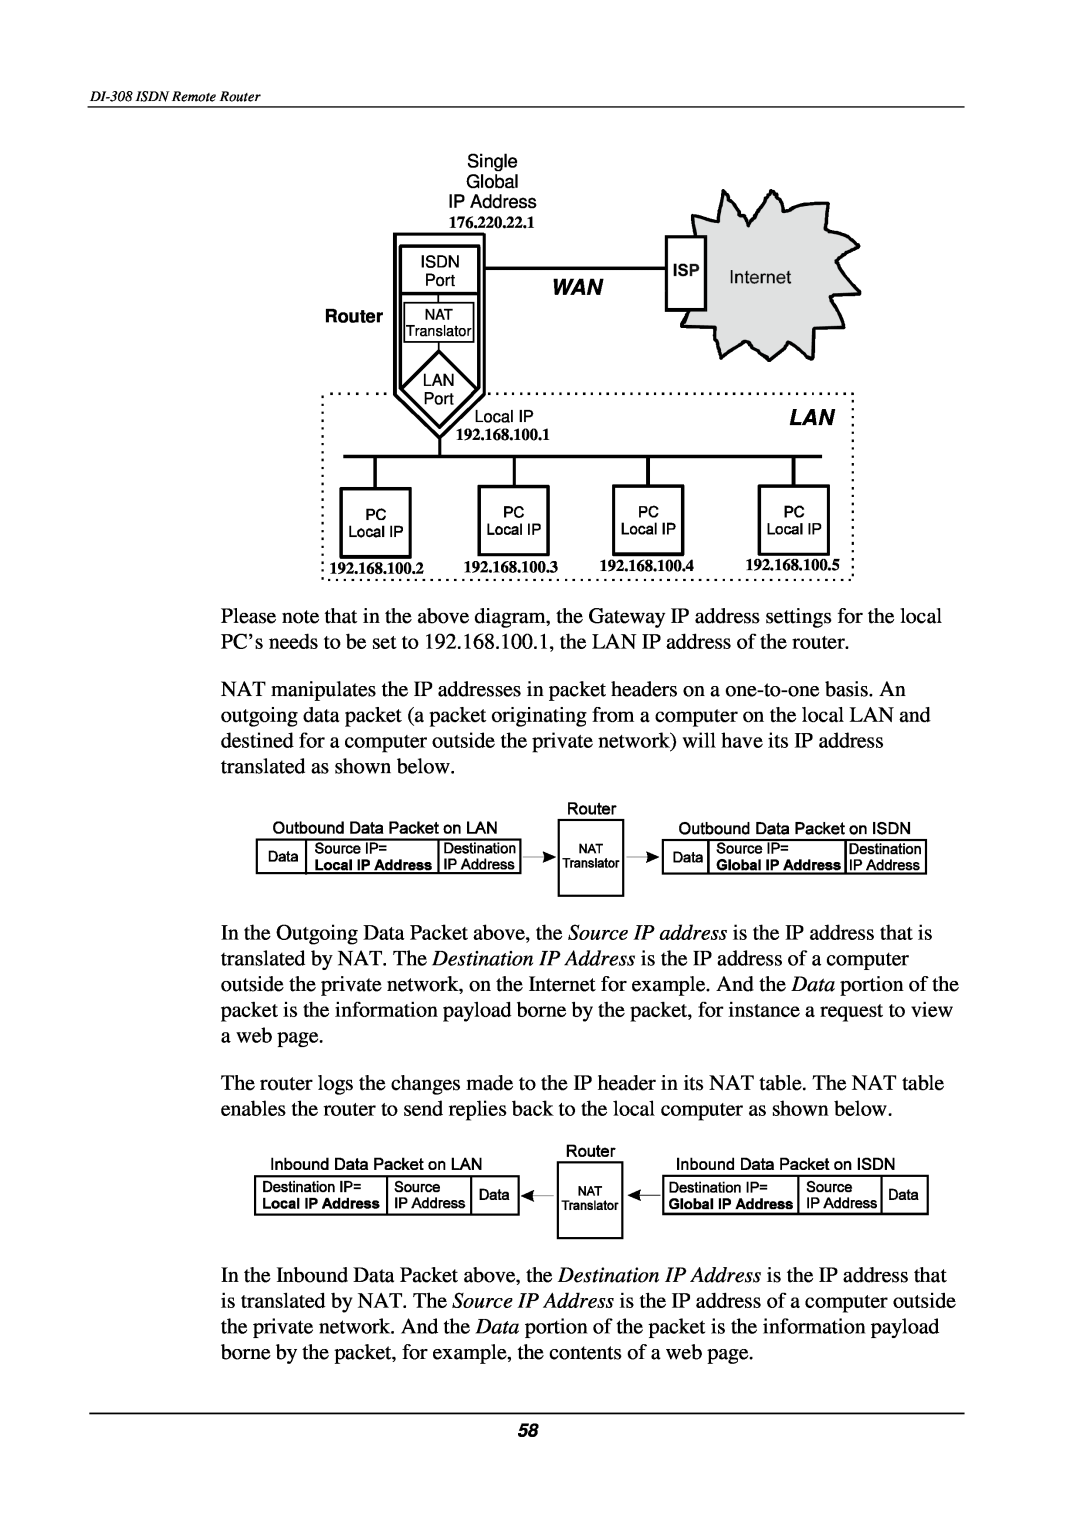 D-Link DI-308 manual Router NAT 